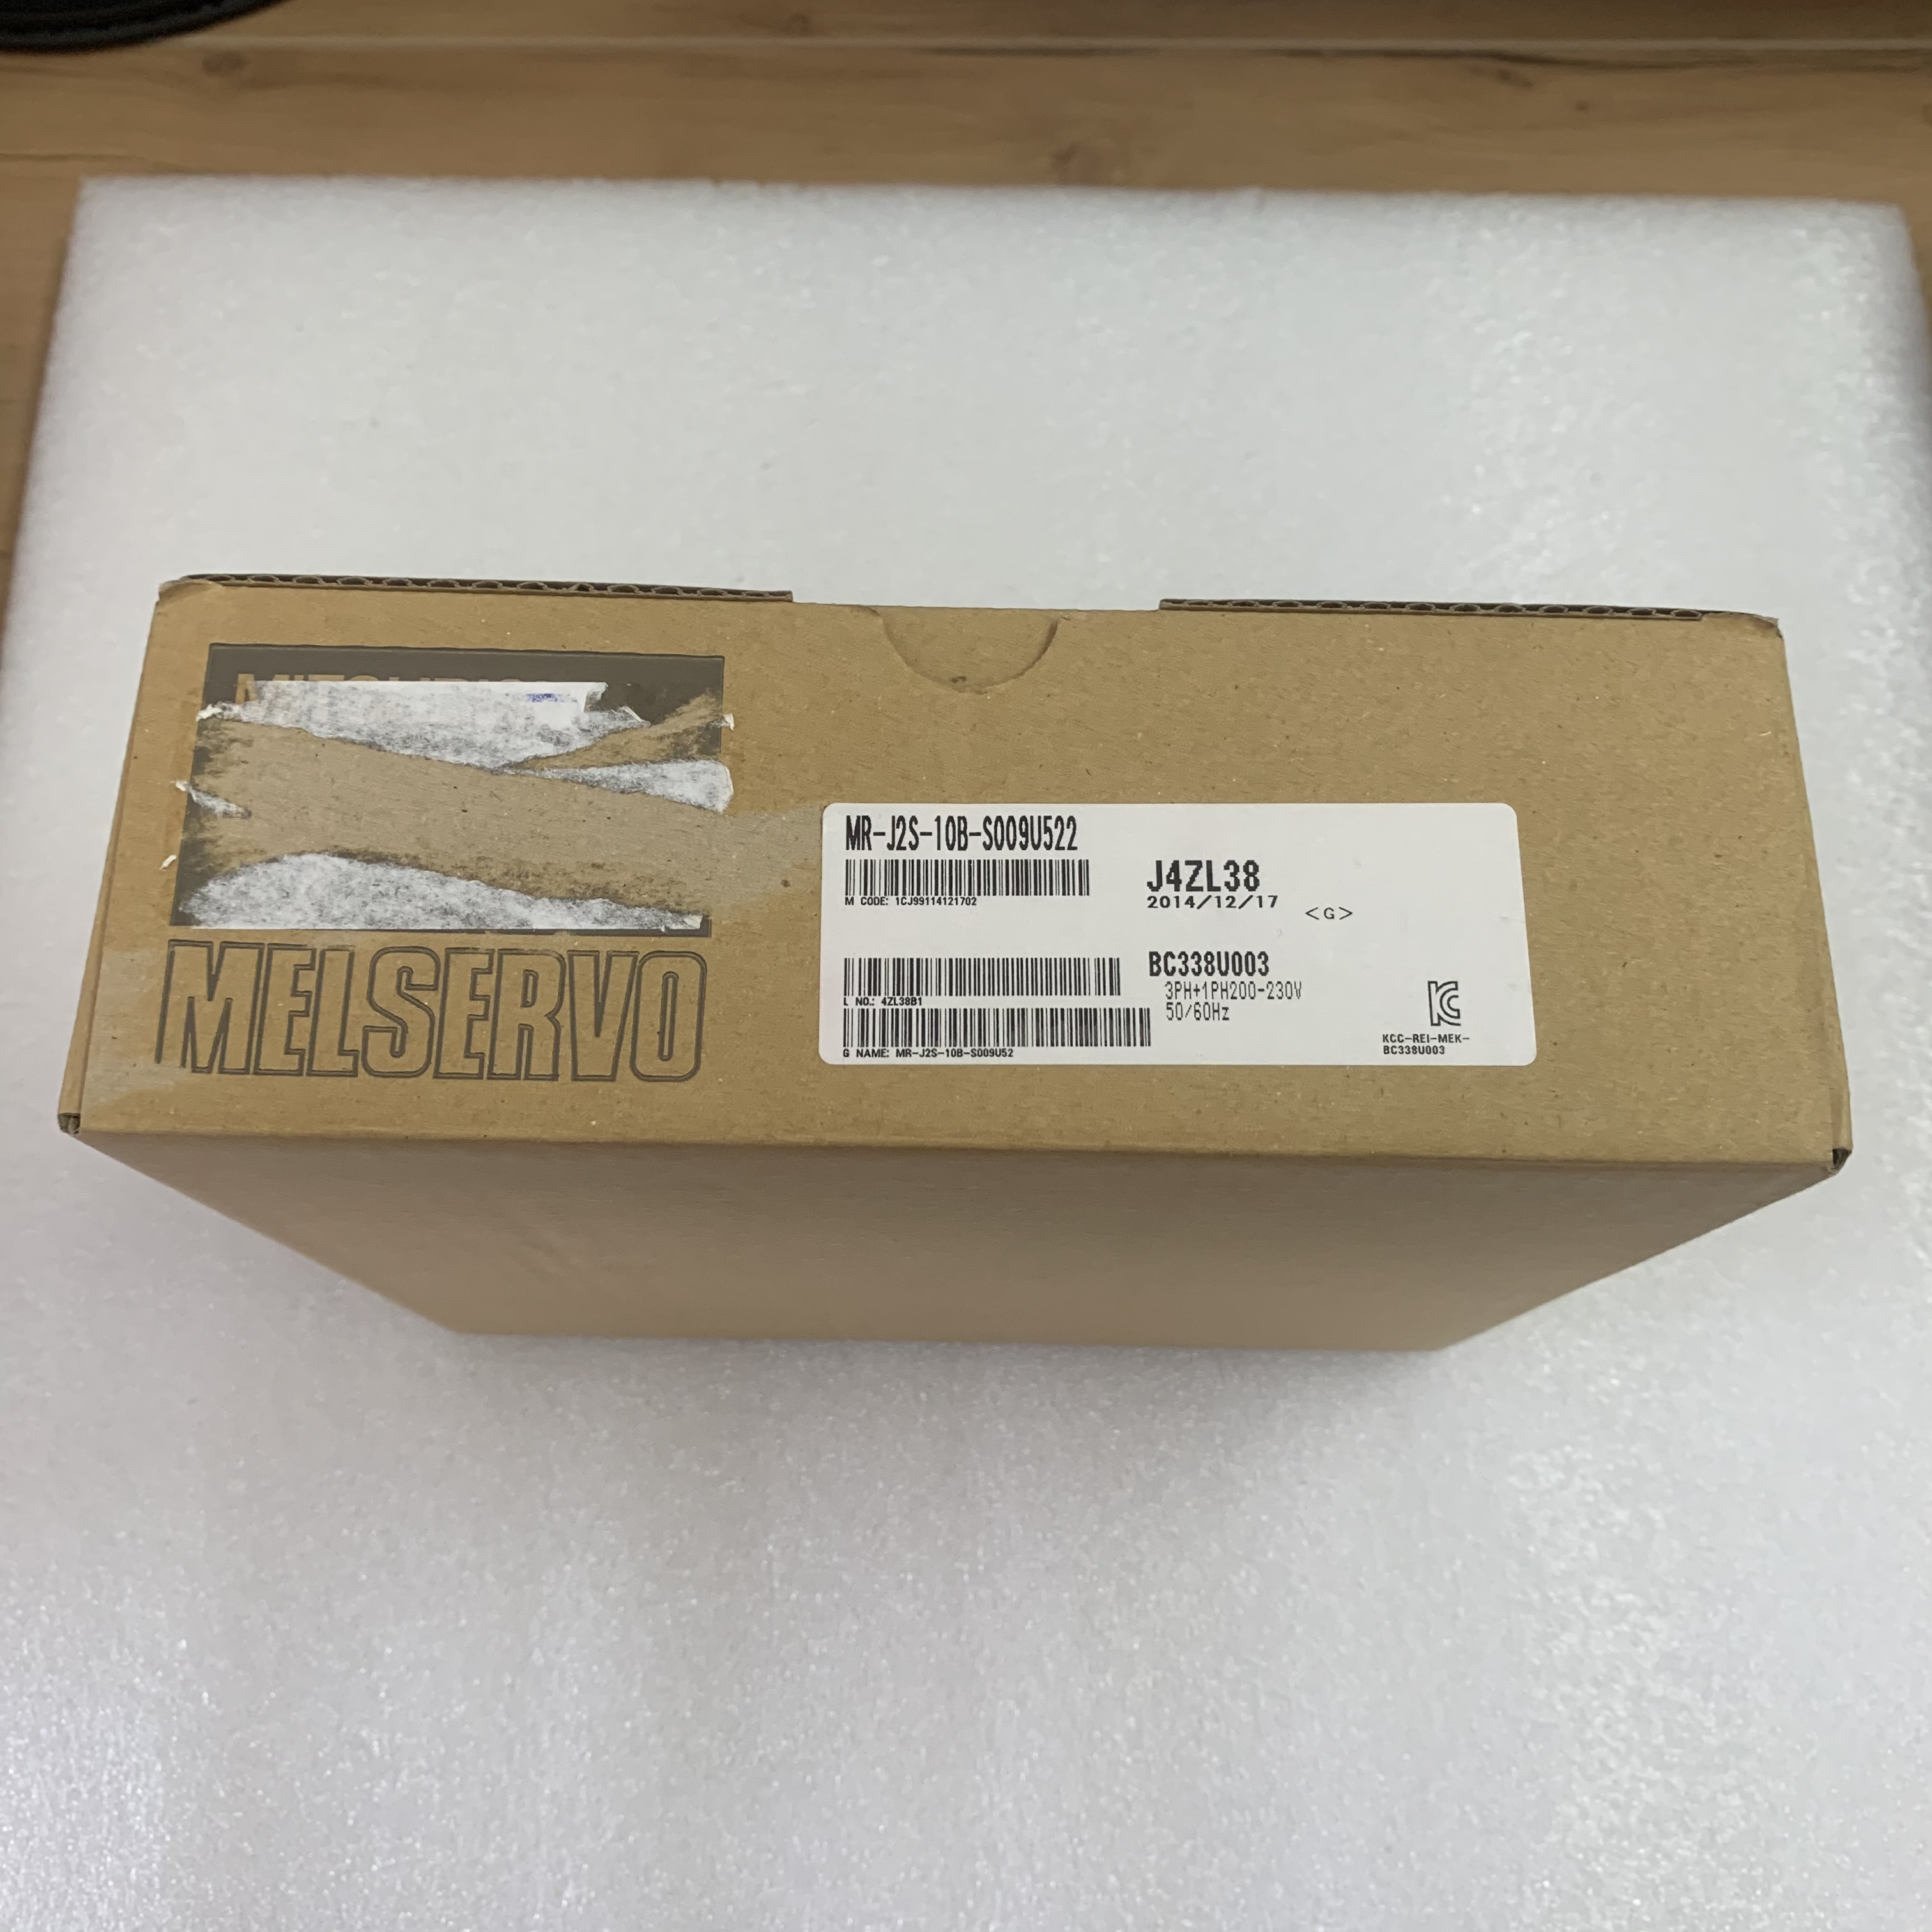 Mitsubishi MR-J2S-10B-S009U522 SERVO DRIVE NEW